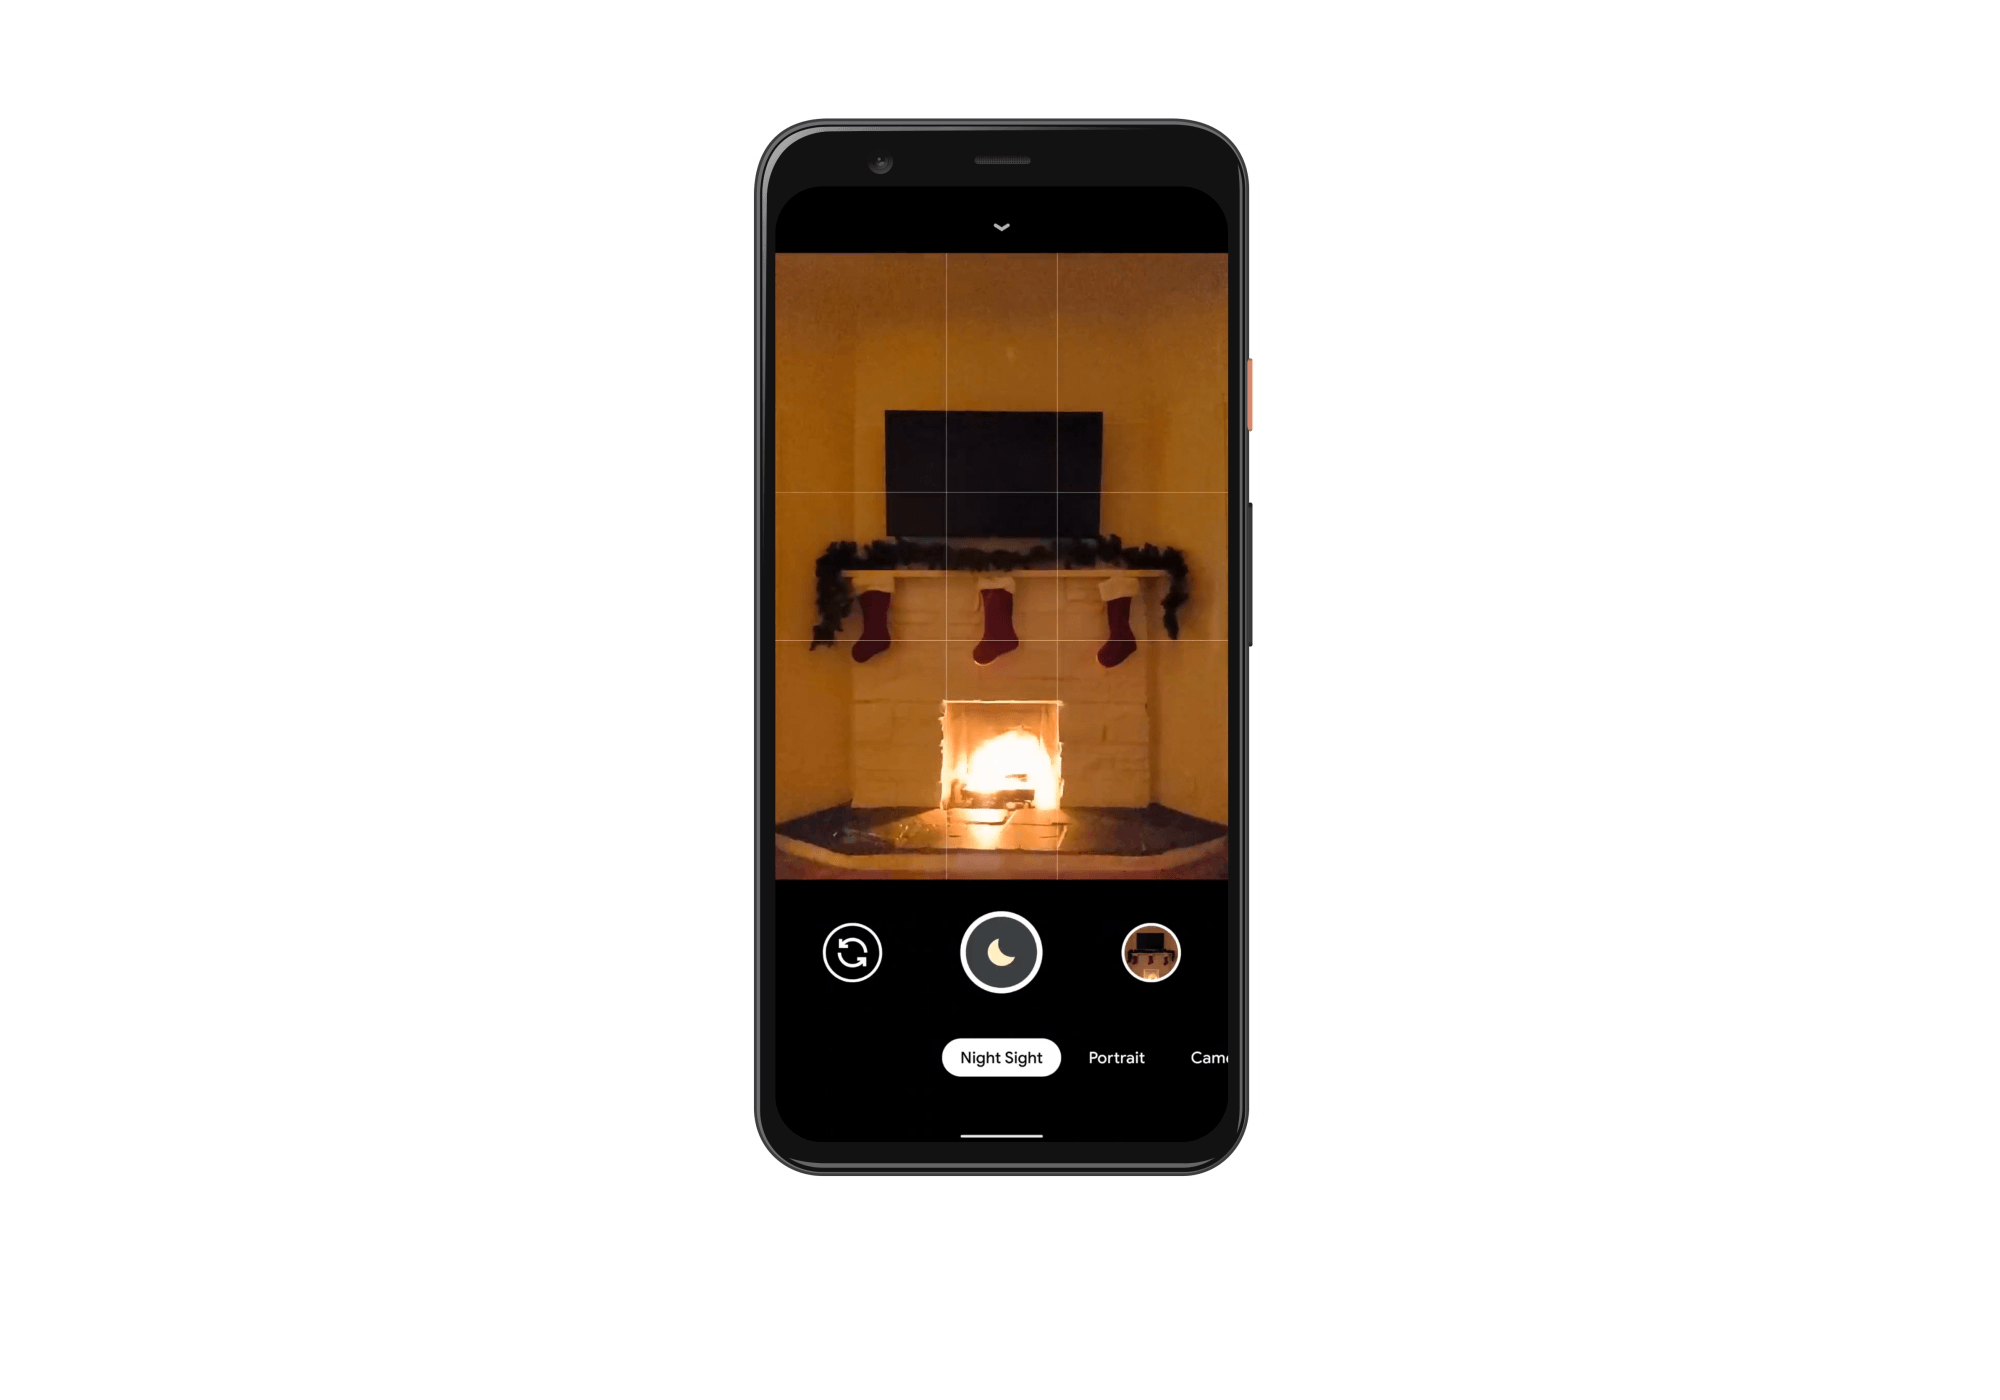 Phone UI displaying night sight functionality